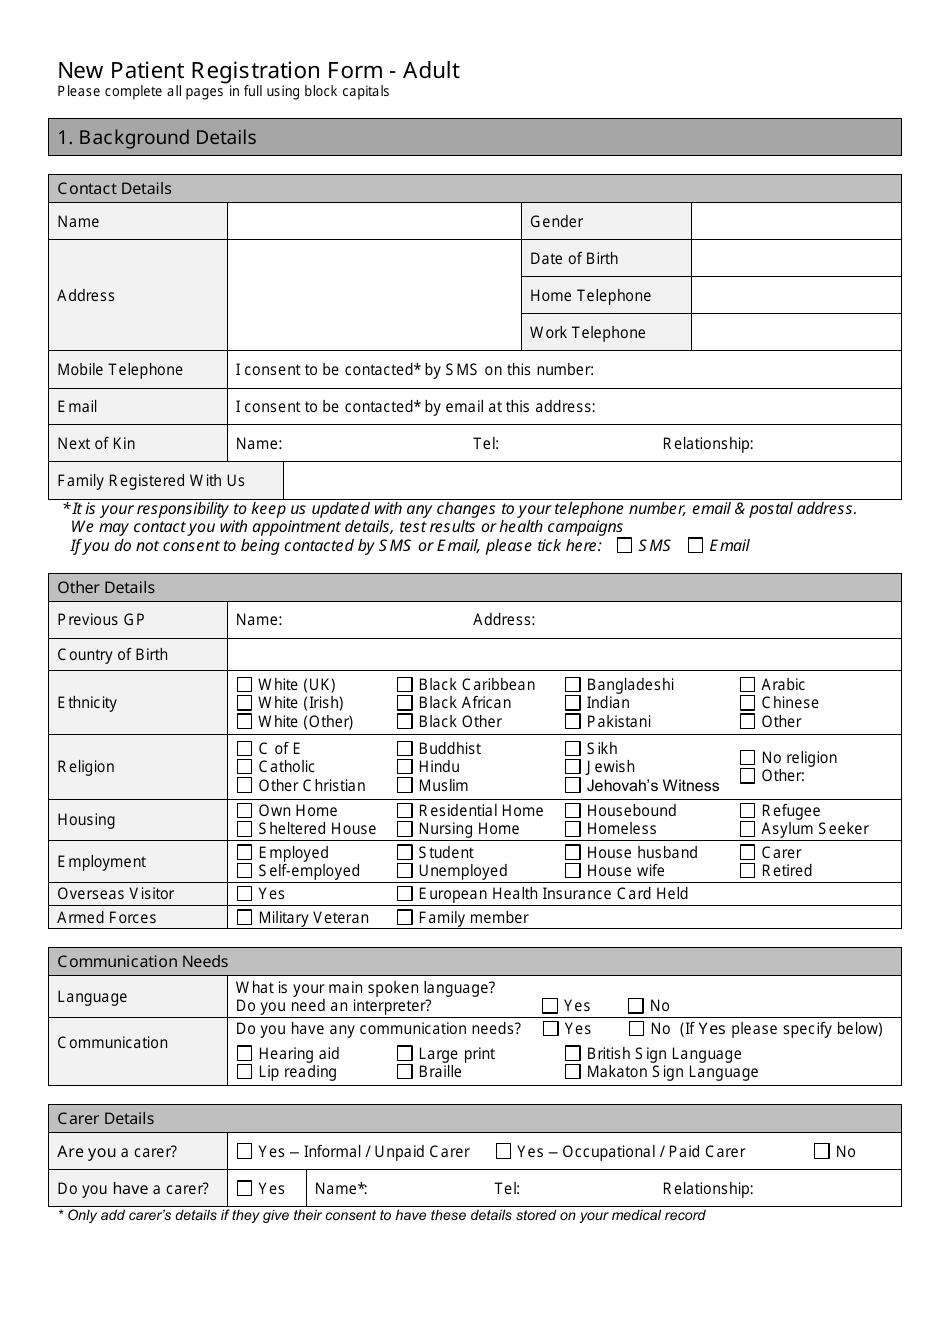 New Patient Registration Form - Adult - United Kingdom, Page 1